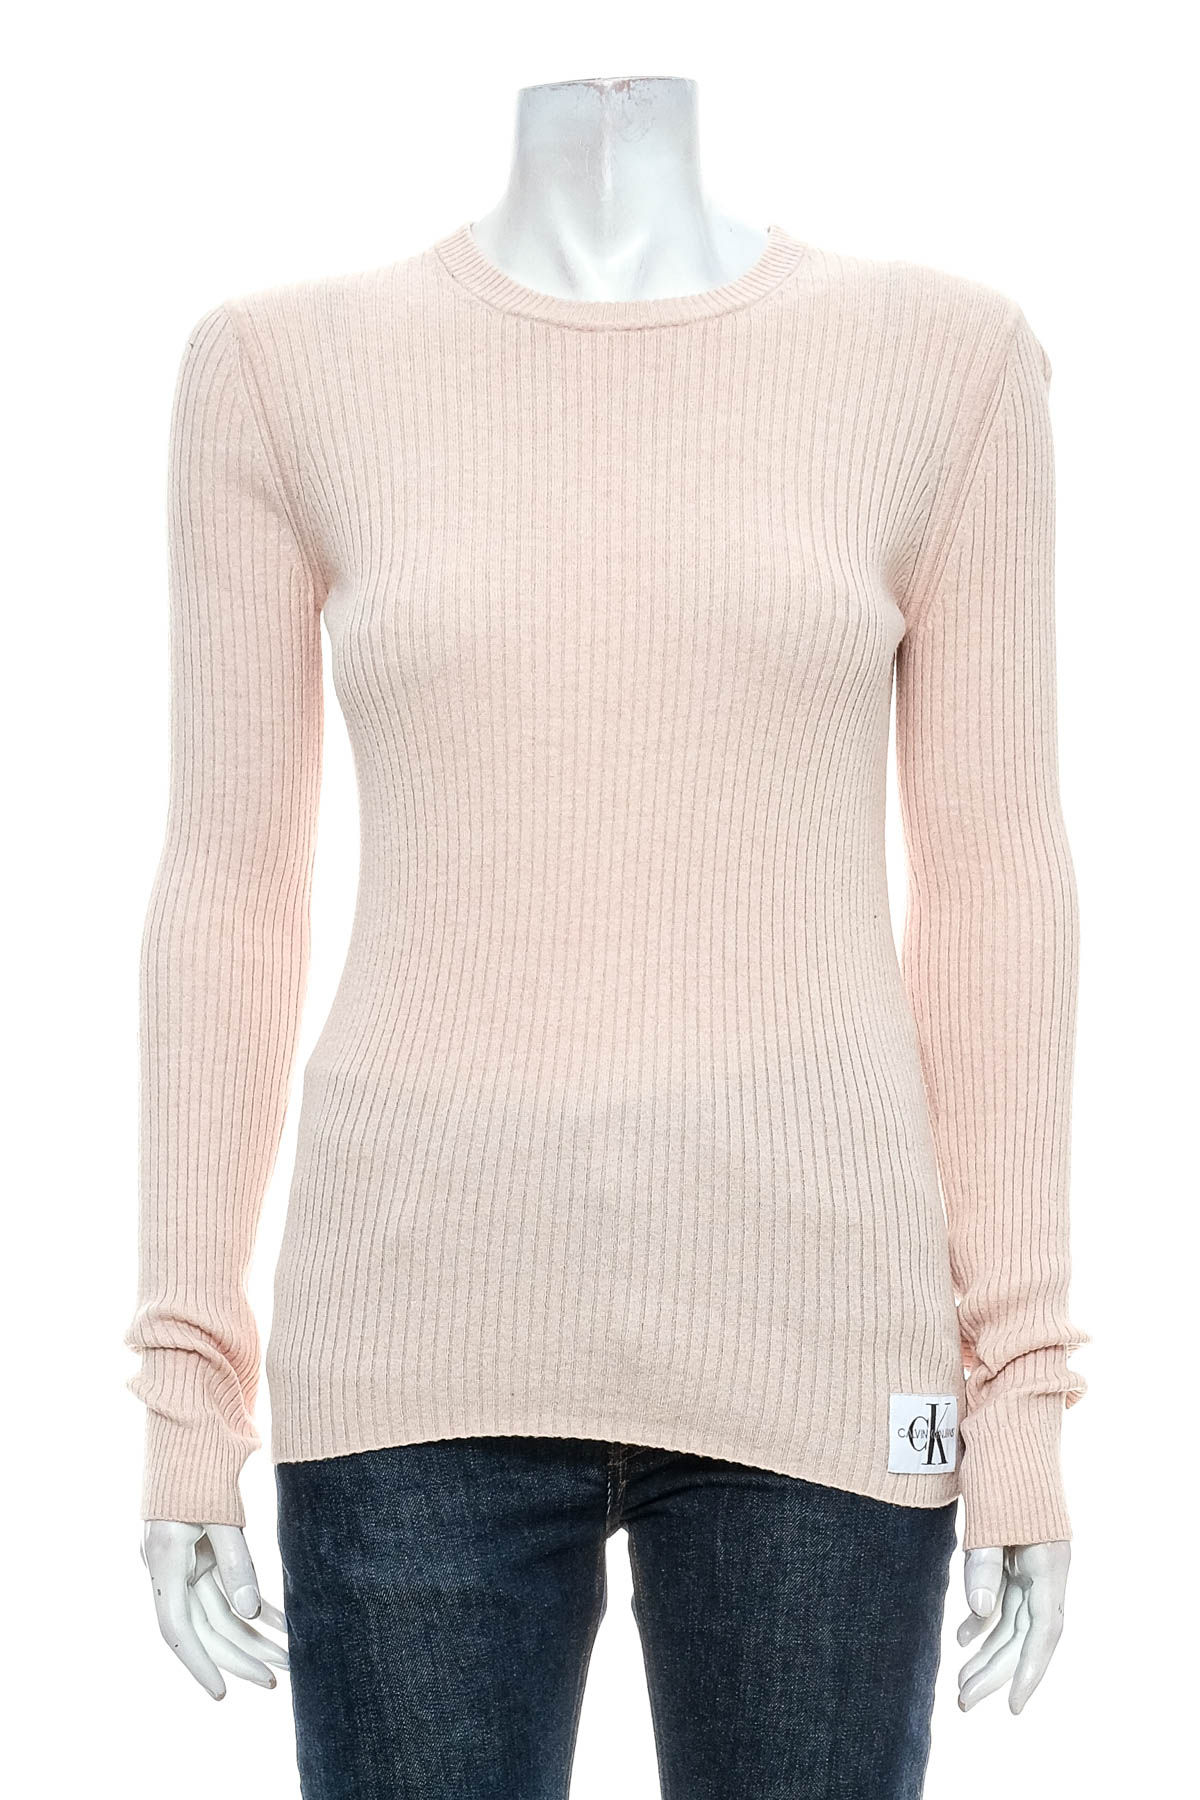 Women's sweater - Calvin Klein Jeans - 0